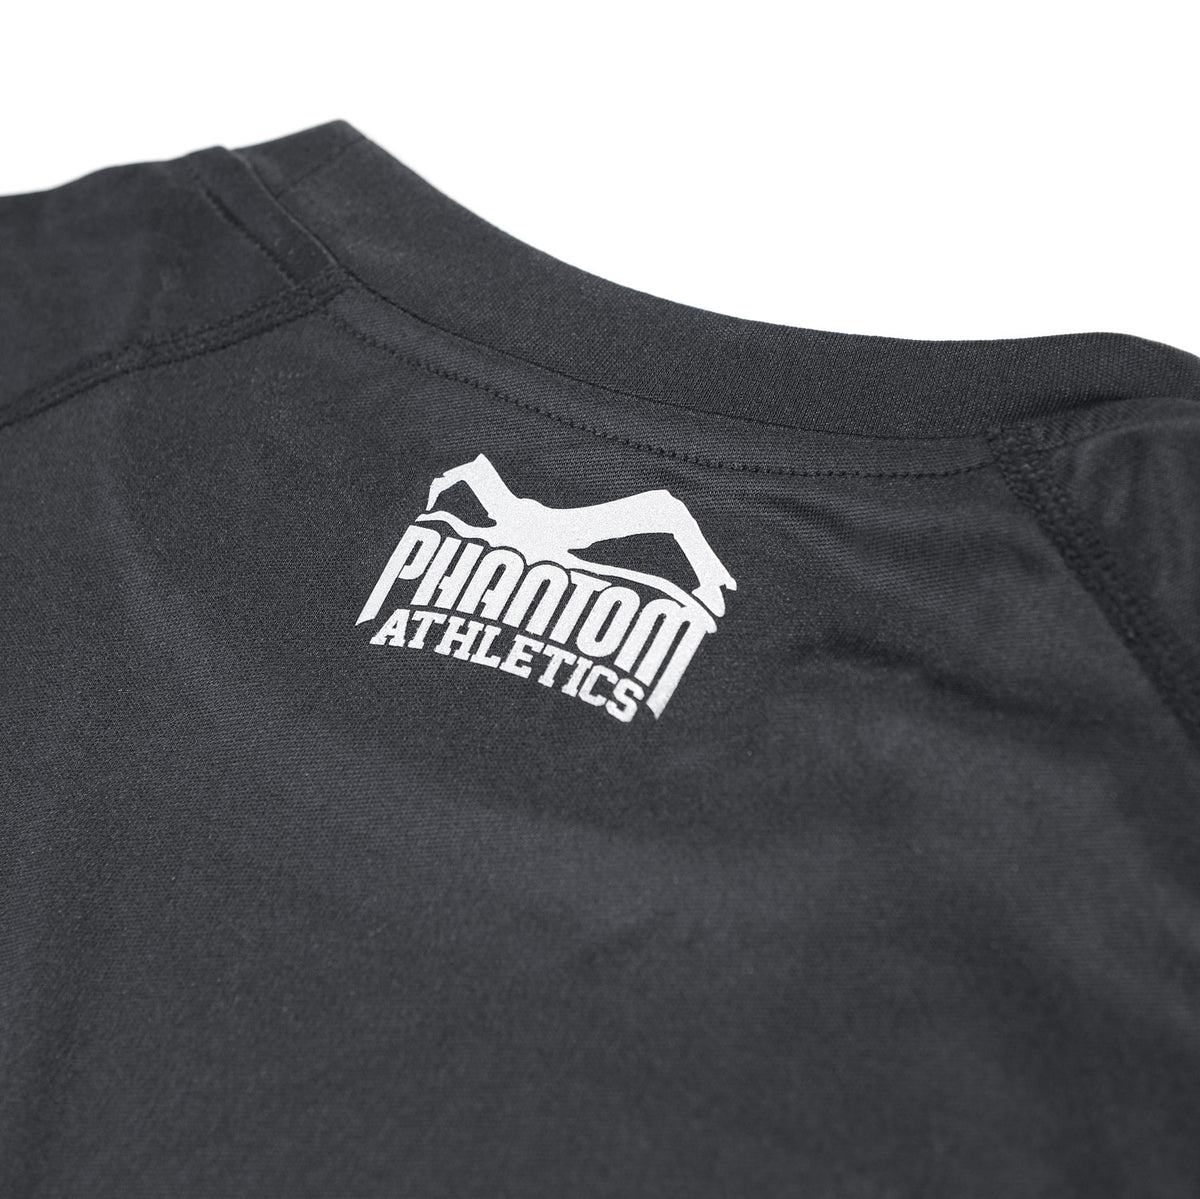 Der hochwertige Silikon Druck im Nacken des Phantom Athletics Tactic Trainingshirts